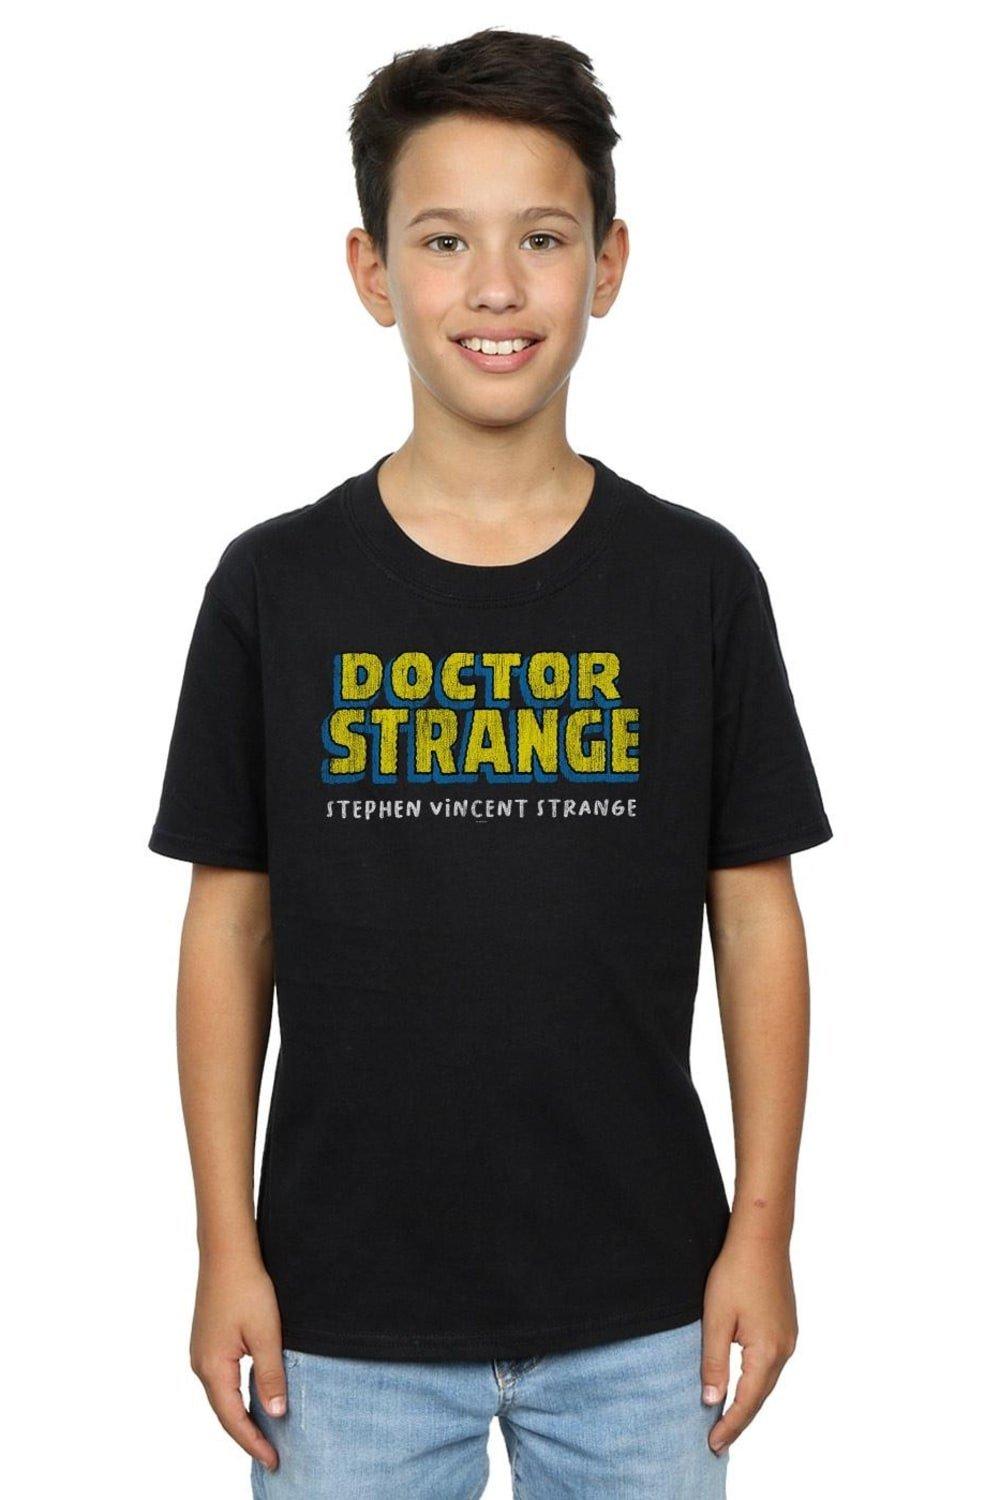 Doctor Strange AKA Stephen Vincent Strange T-Shirt